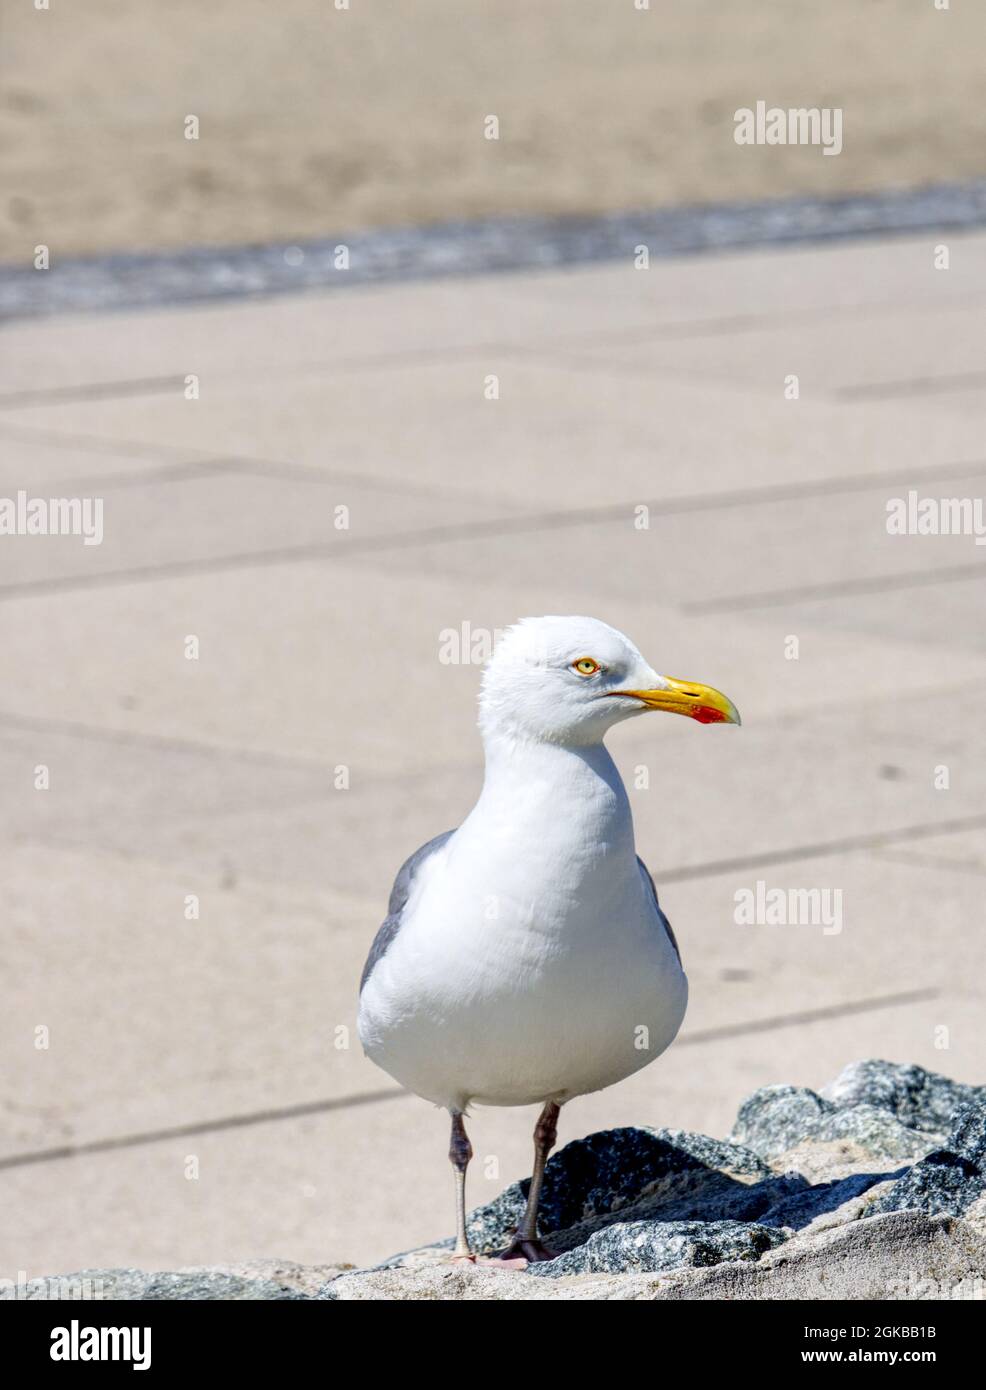 close up of a seagull beach promenade Stock Photo